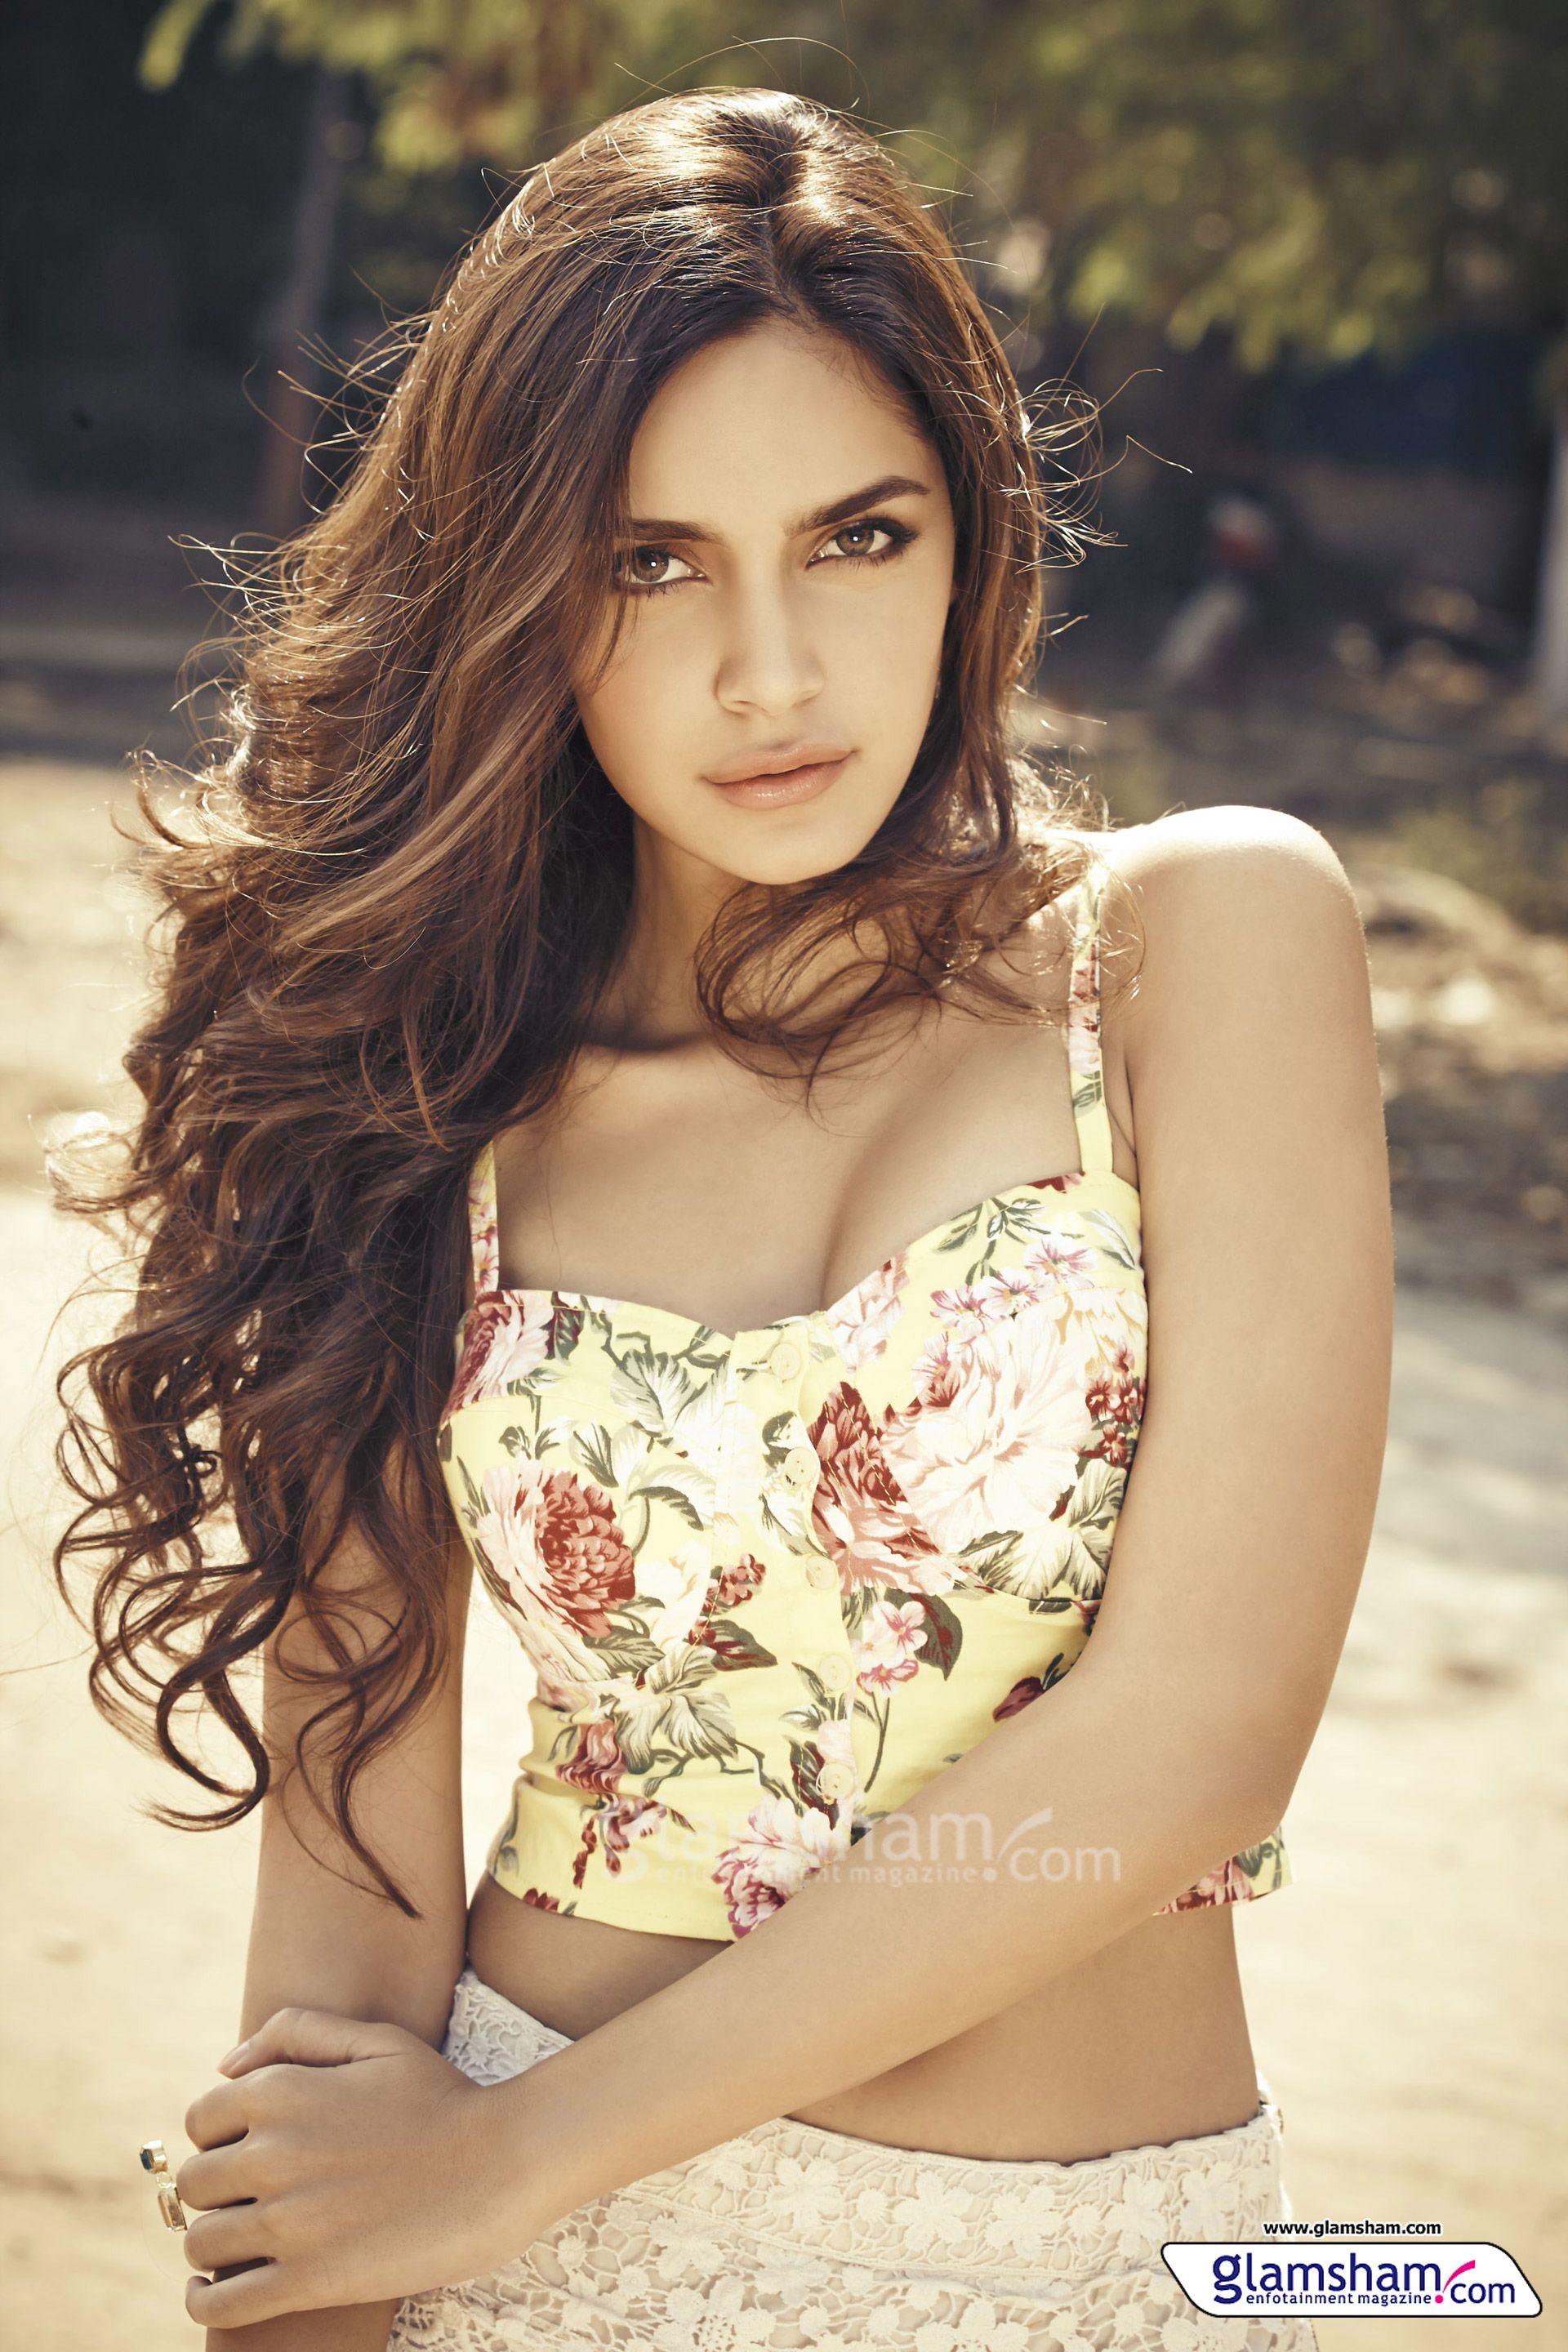 Padamsee. Indian actresses, Actresses, Beautiful models